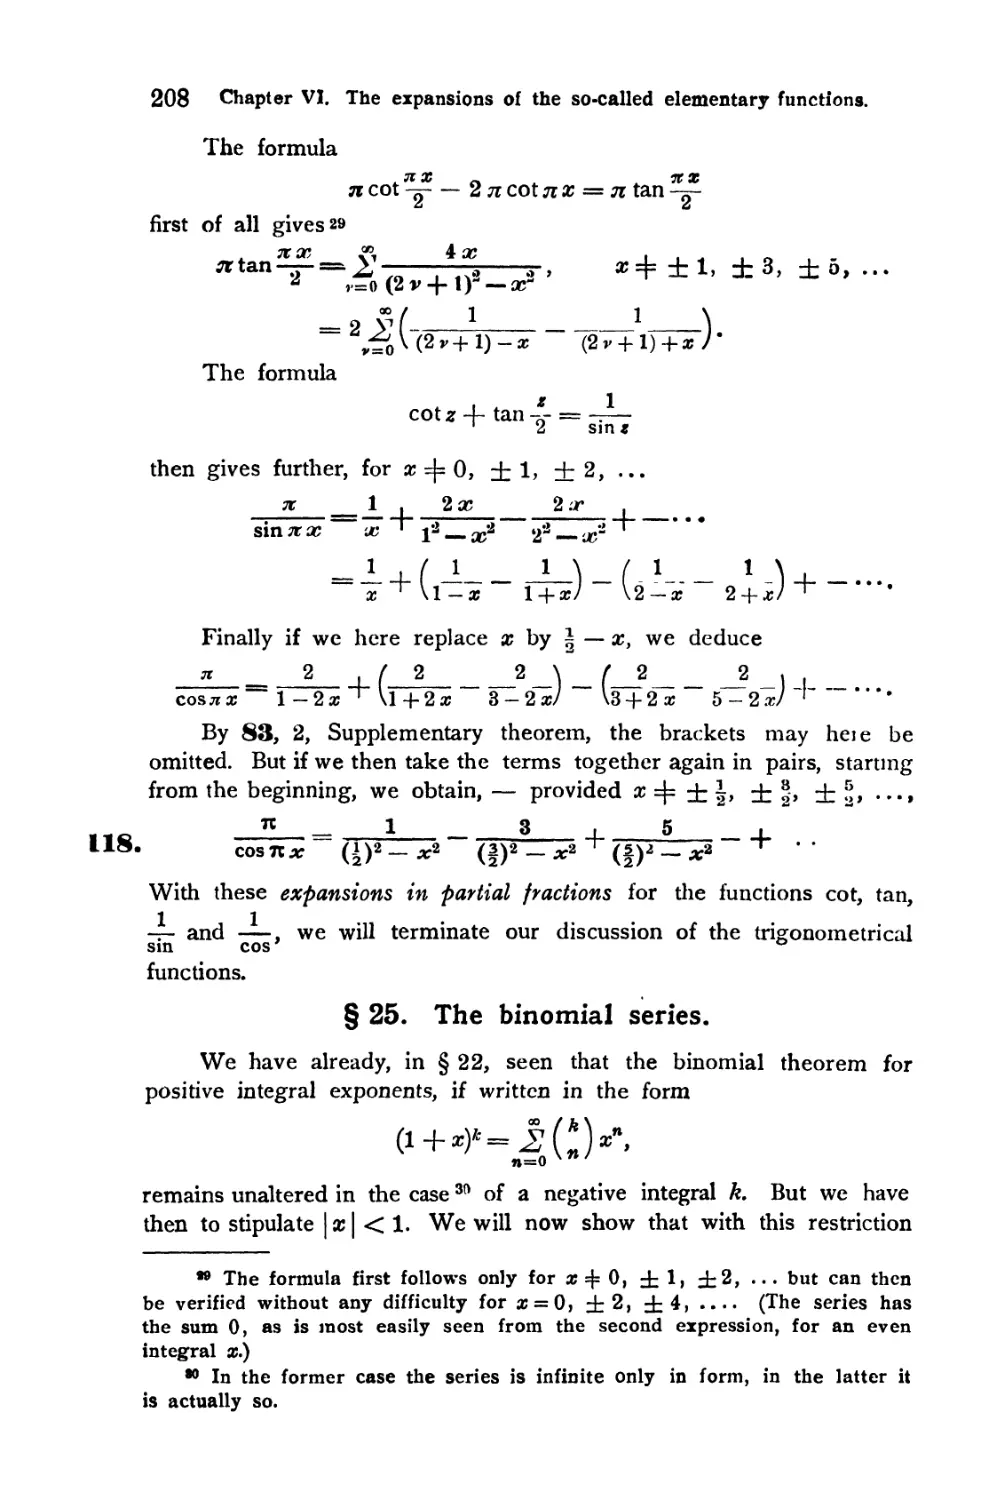 § 25. The binomial series